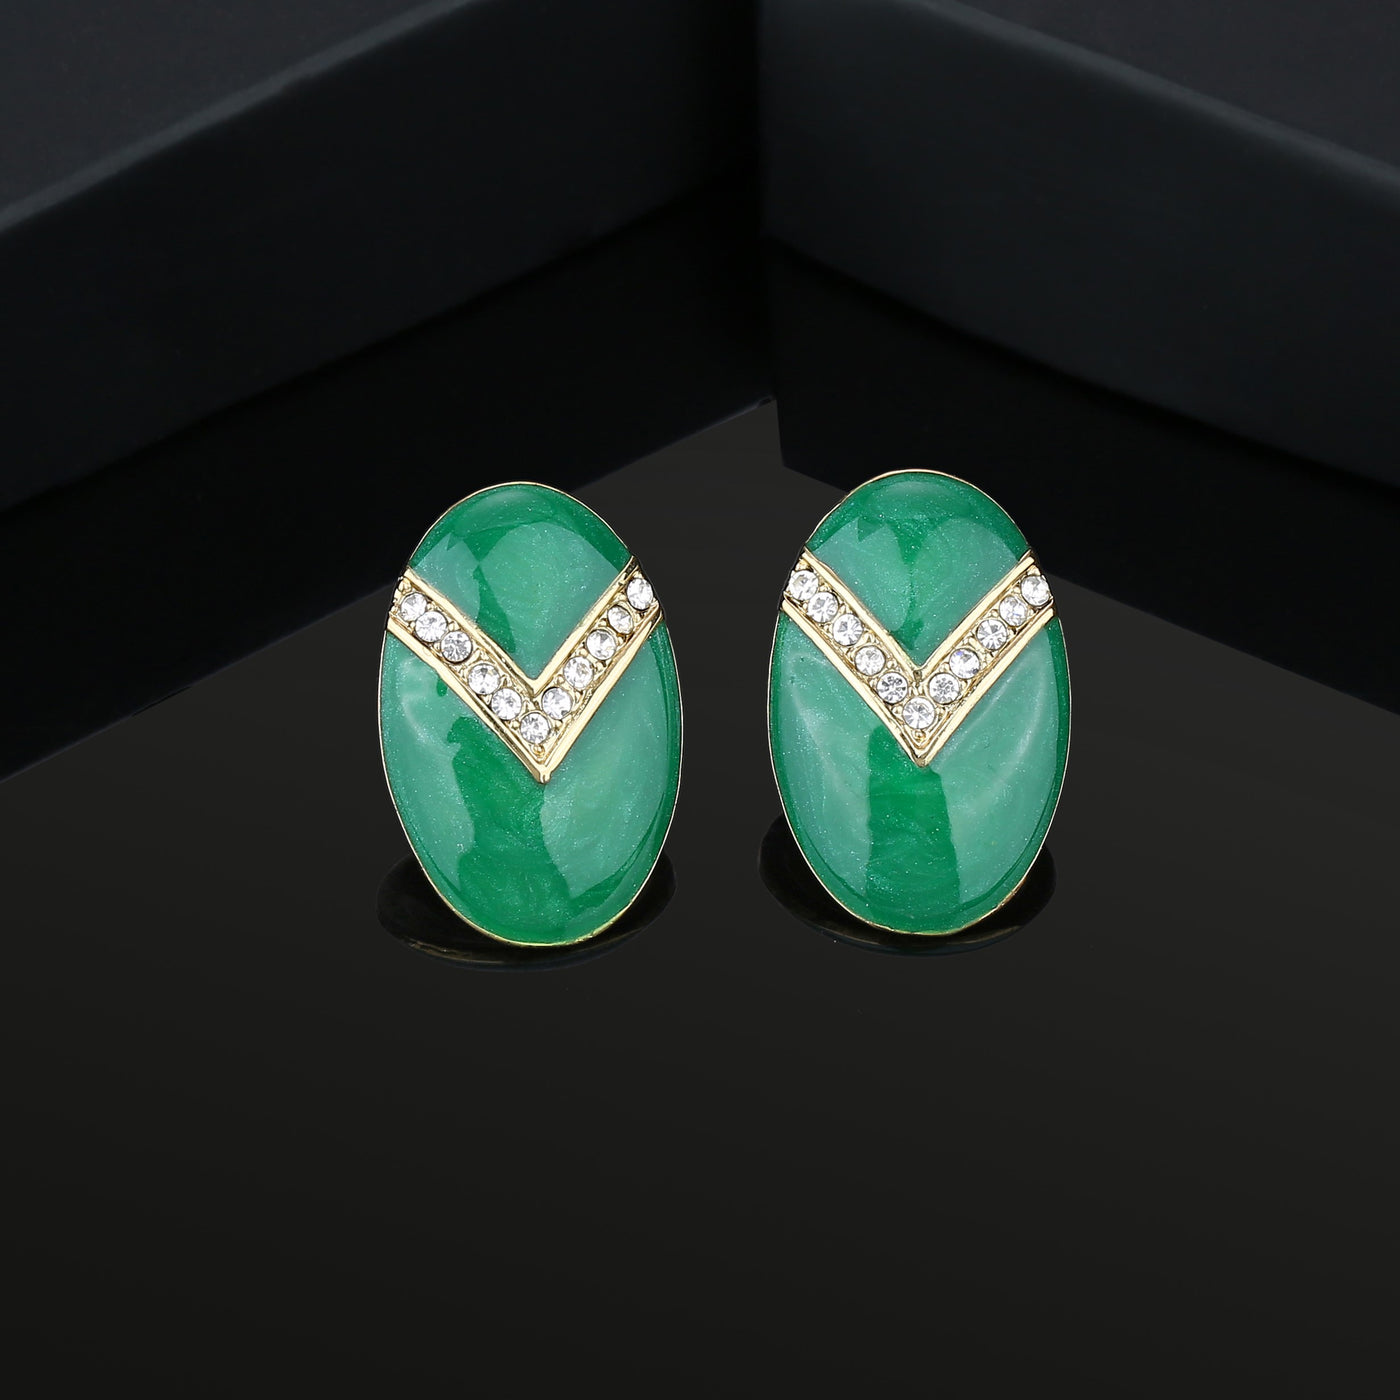 Estele Green colour and white colour stones studs for women